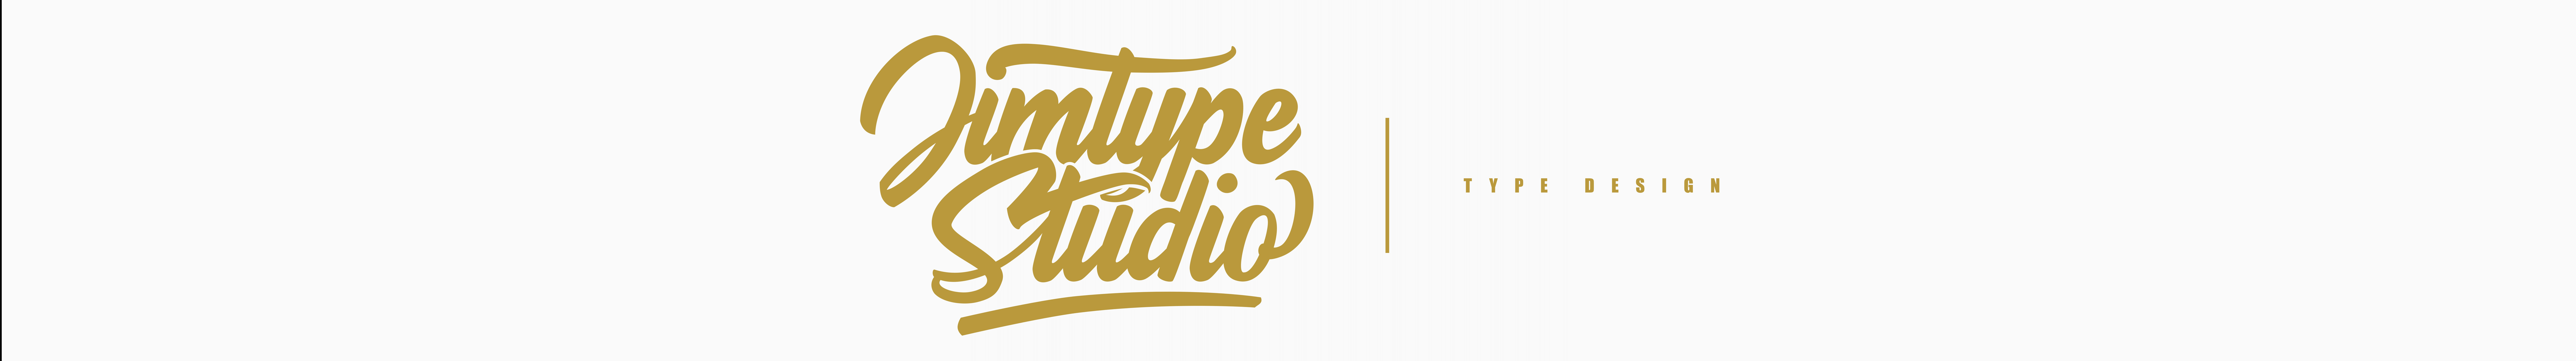 Jimtype Studio's profile banner